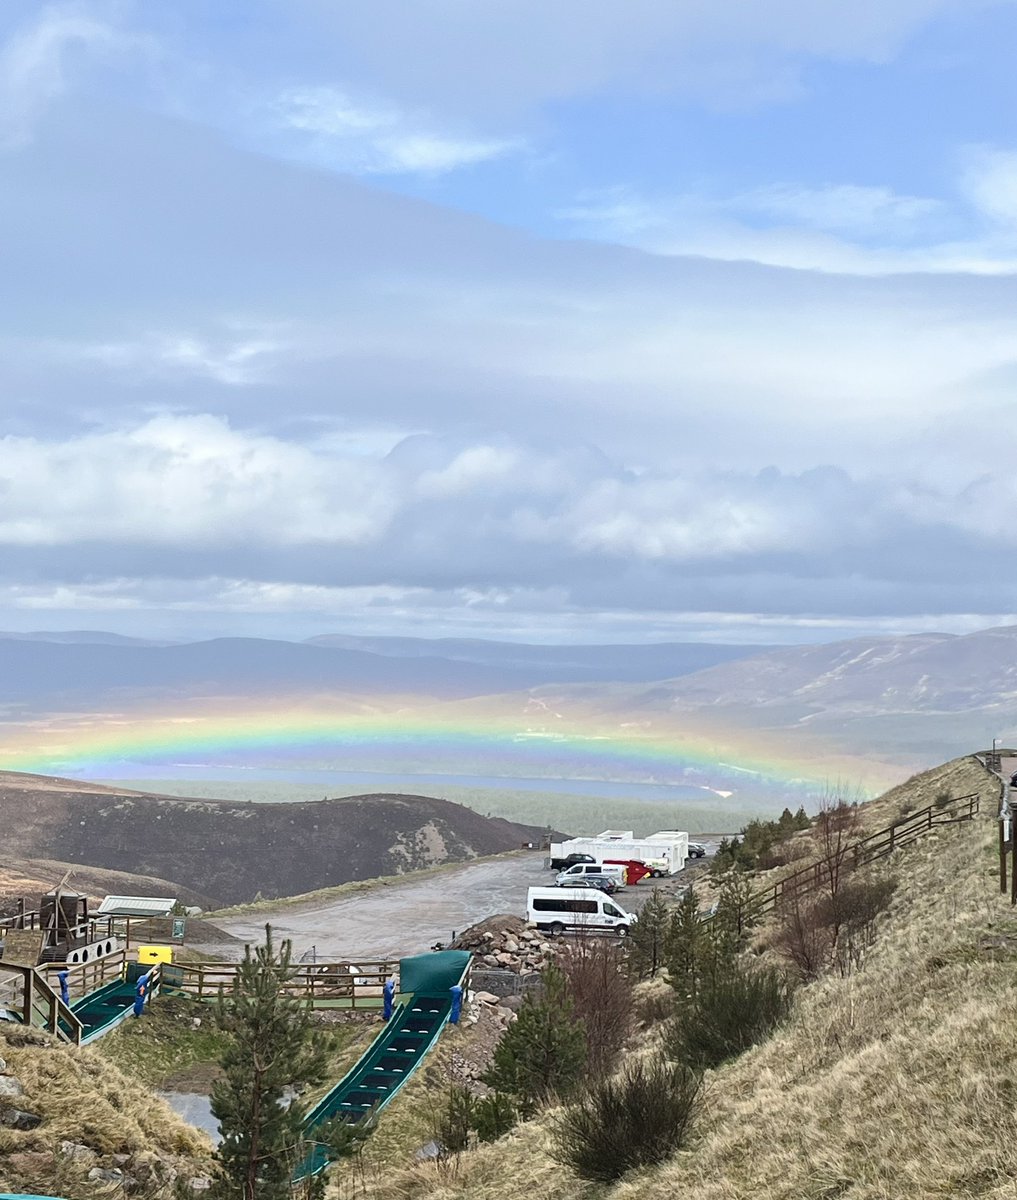 Amazing rainbow yesterday looking towards Aviemore from Cairngorm ski area.